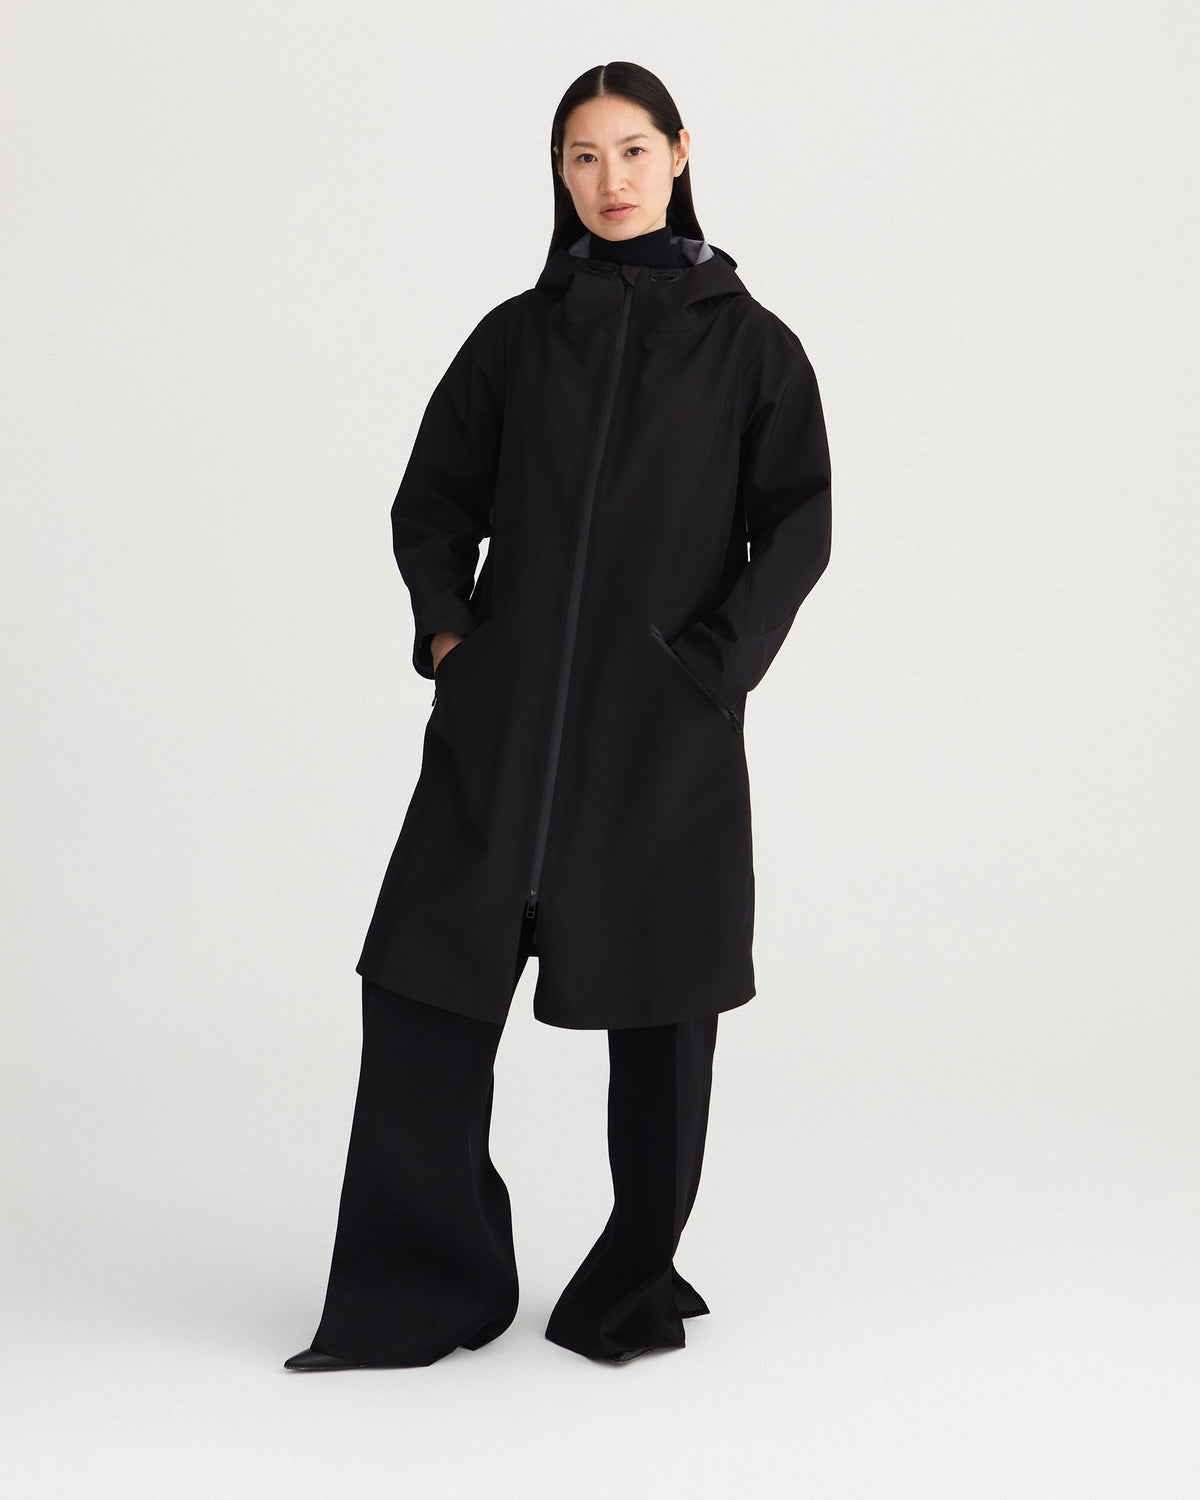 BYBROWN | Premium Women's Rainwear Outerwear from Amsterdam